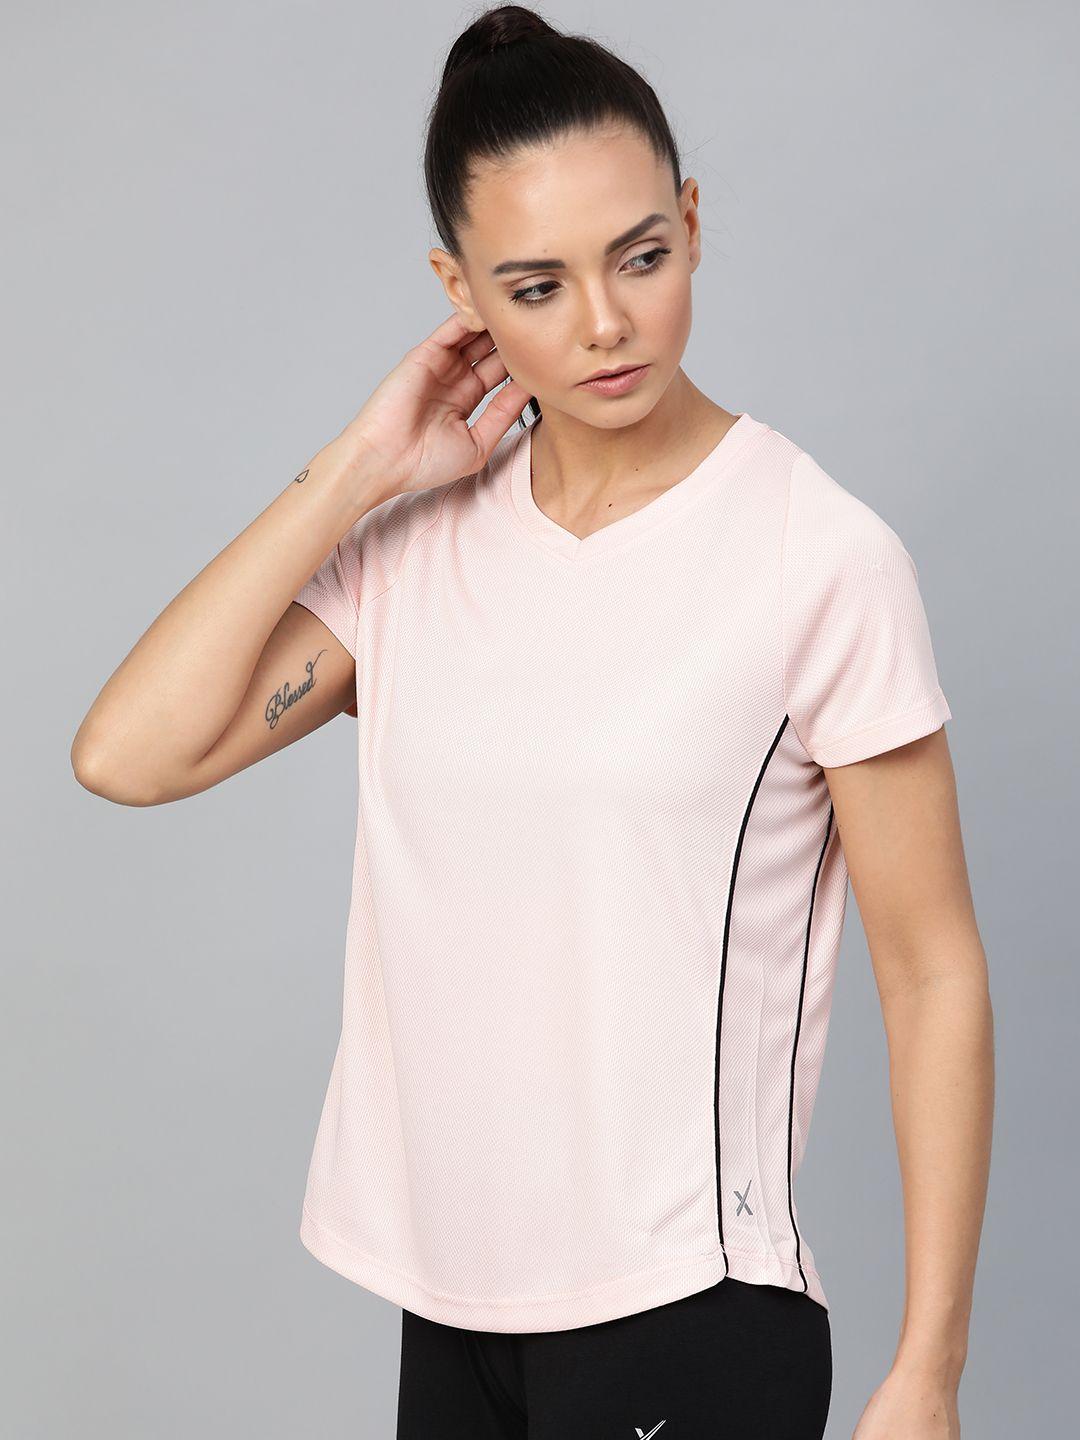 hrx by hrithik roshan women peach whip solid rapid-dry racket sports tshirts